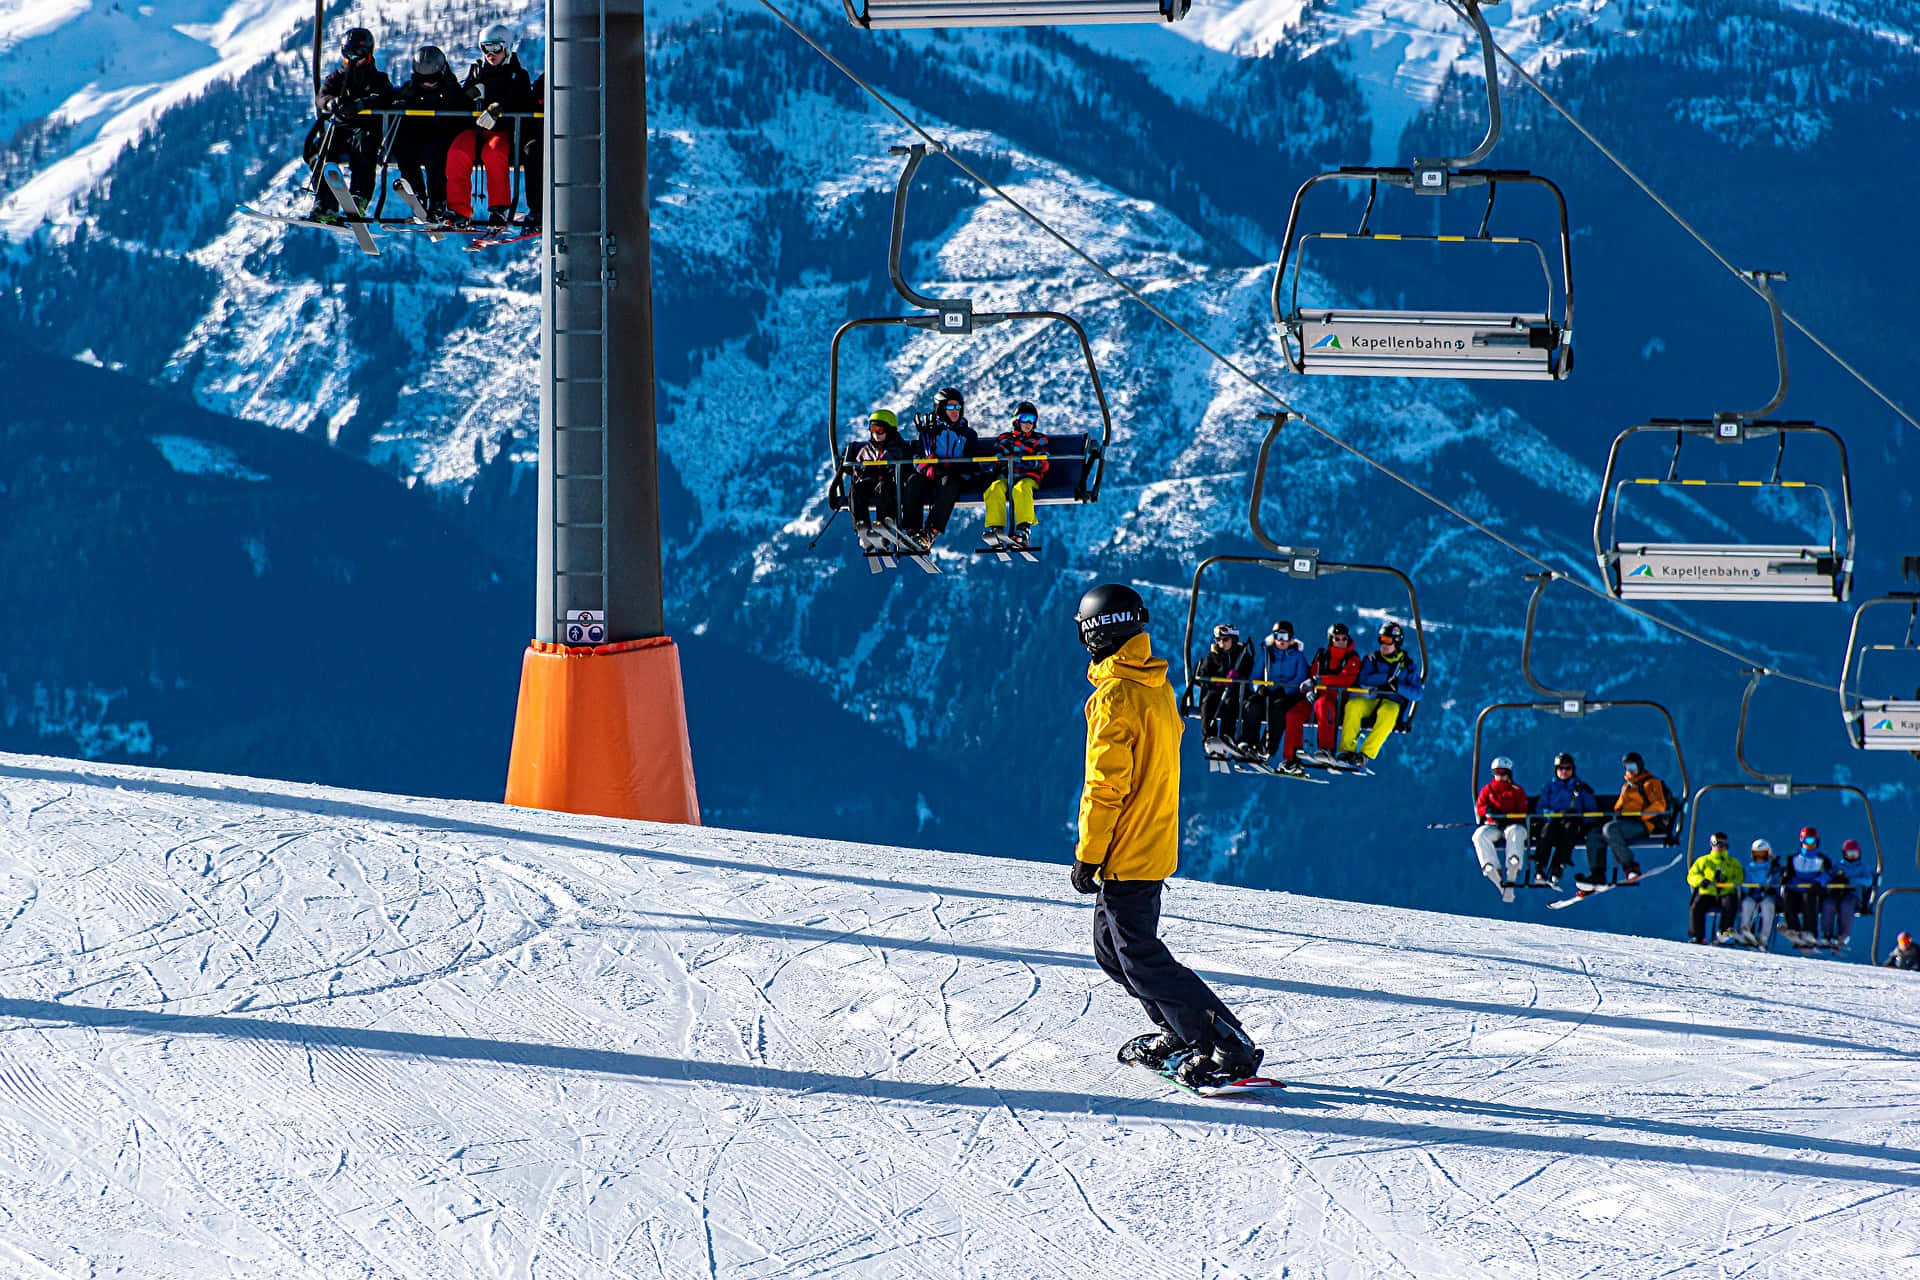 Scenic Ski Resort in Winter Wonderland Wallpaper